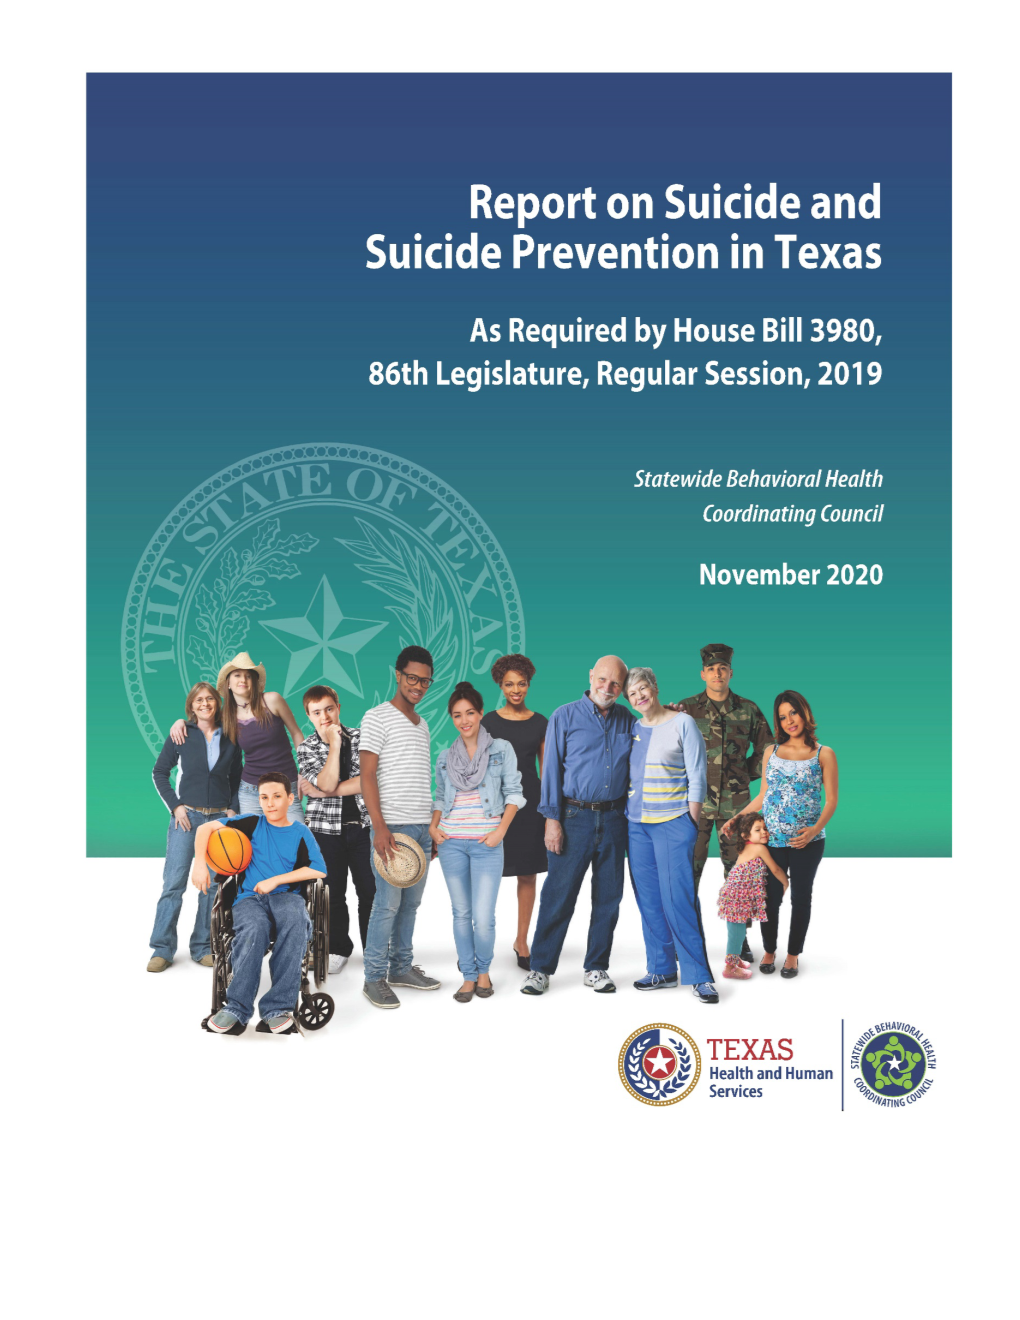 Legislative Report on Suicide and Suicide Prevention in Texas